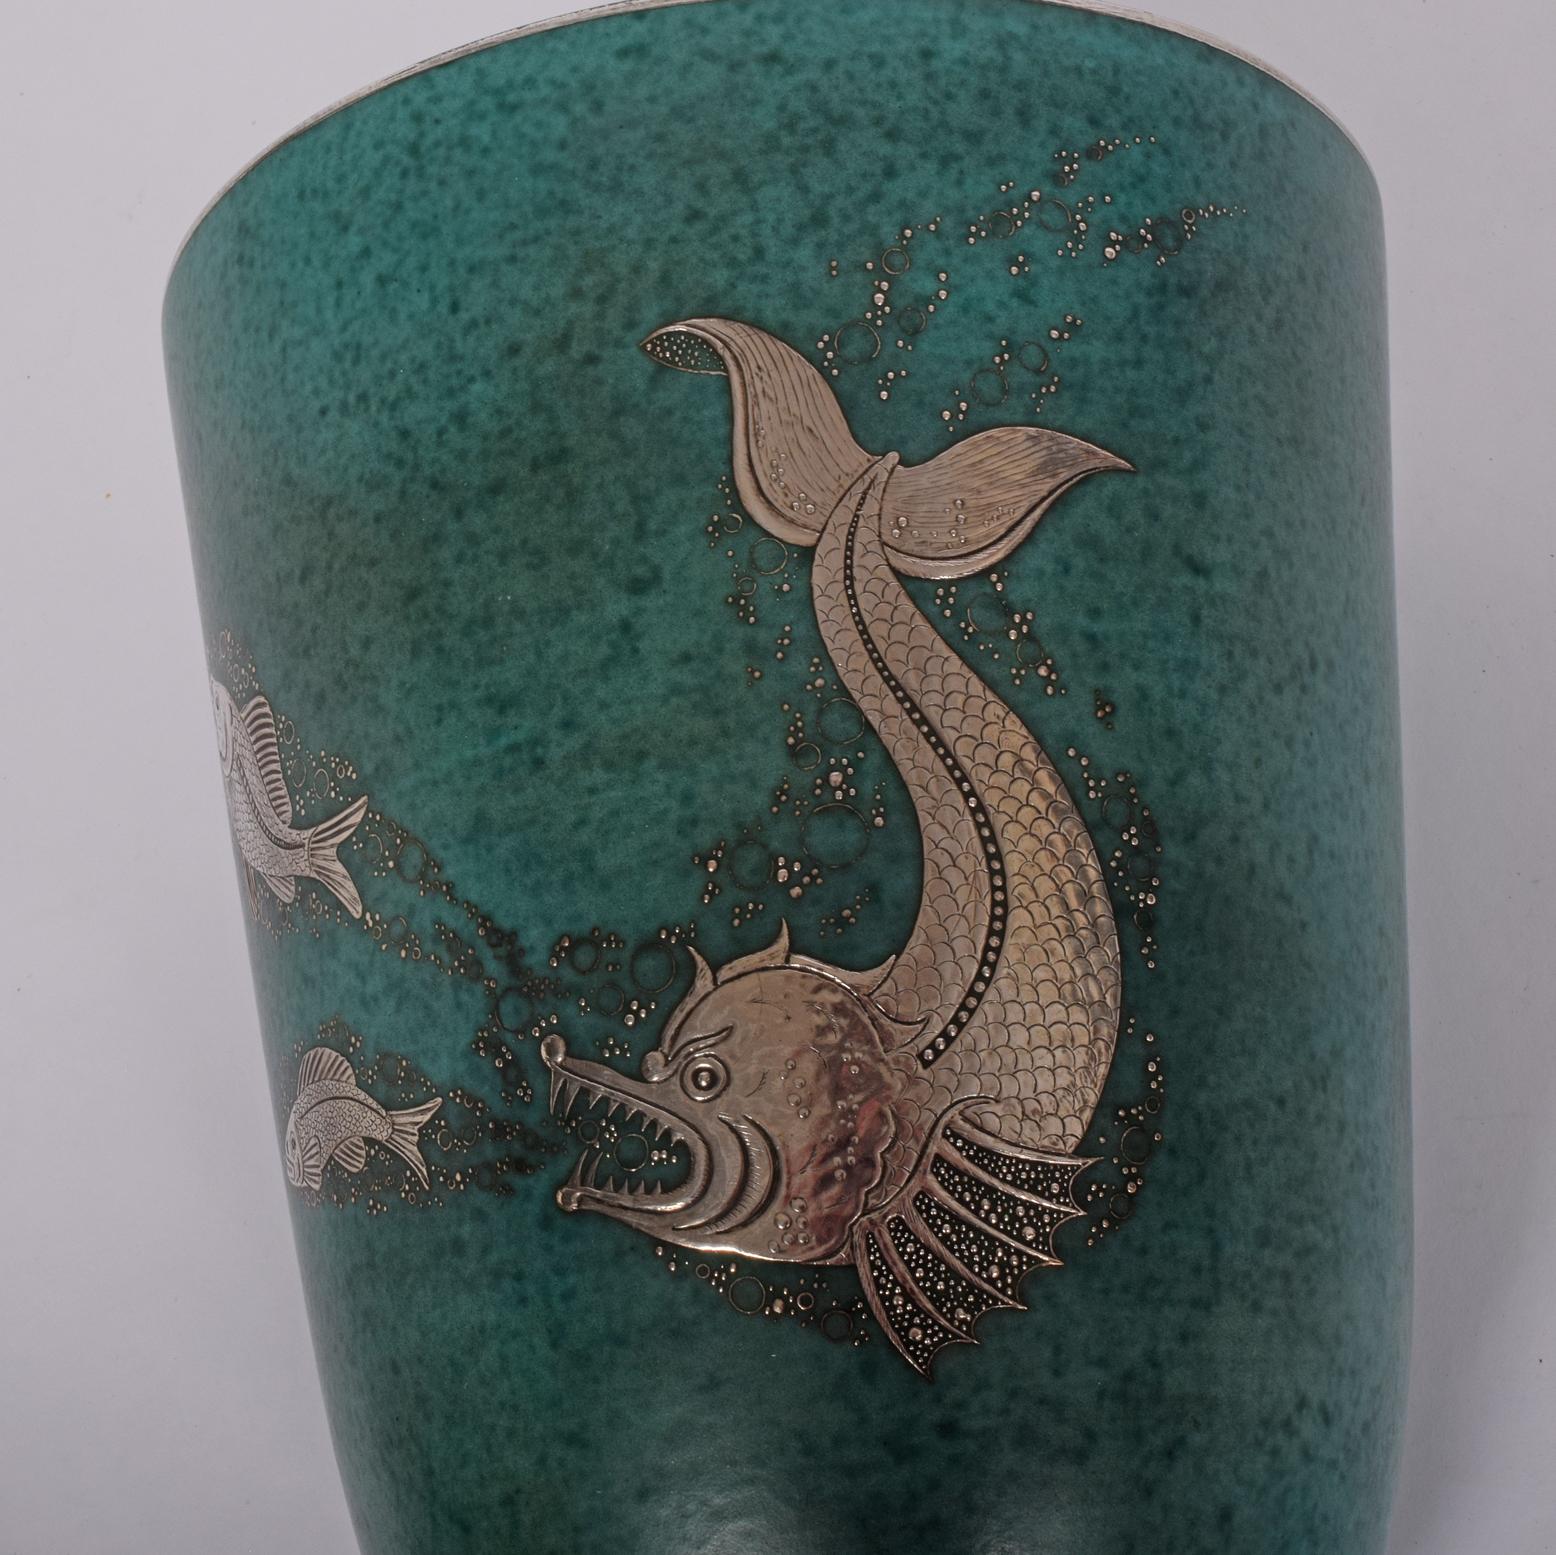 Large Argenta vase with fish, Glazed stoneware, silver inlay; Manufacturer stamp/HANDDREJAD, inlaid signature GUSTAVSBERG D ARGENTA with anchor/978/IV/E MADE IN SWEDEN. 11 1/2